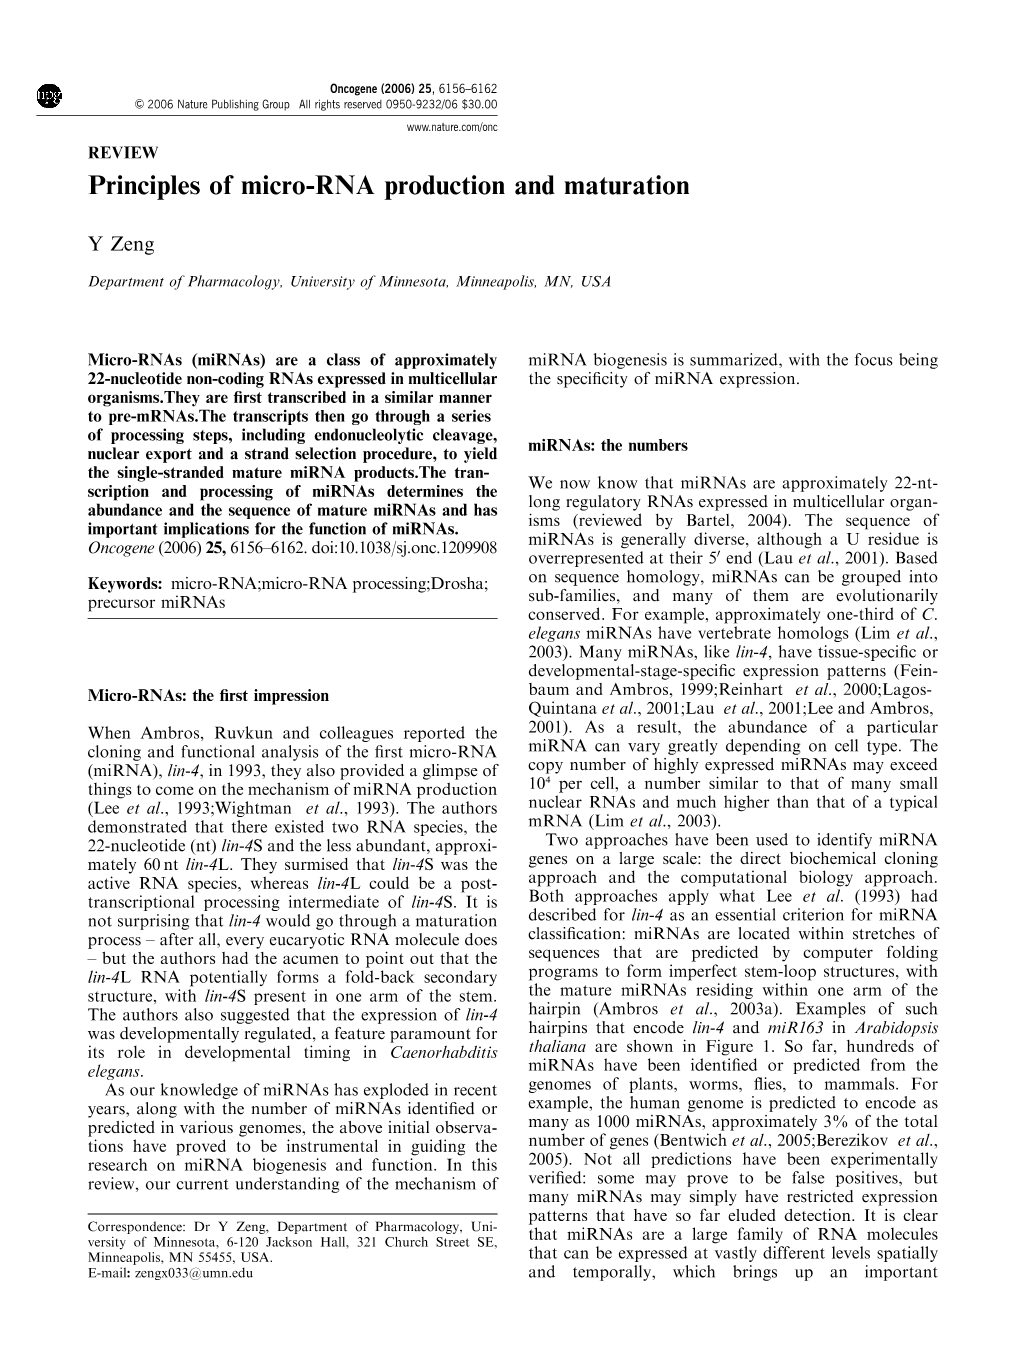 Principles of Micro-RNA Production and Maturation